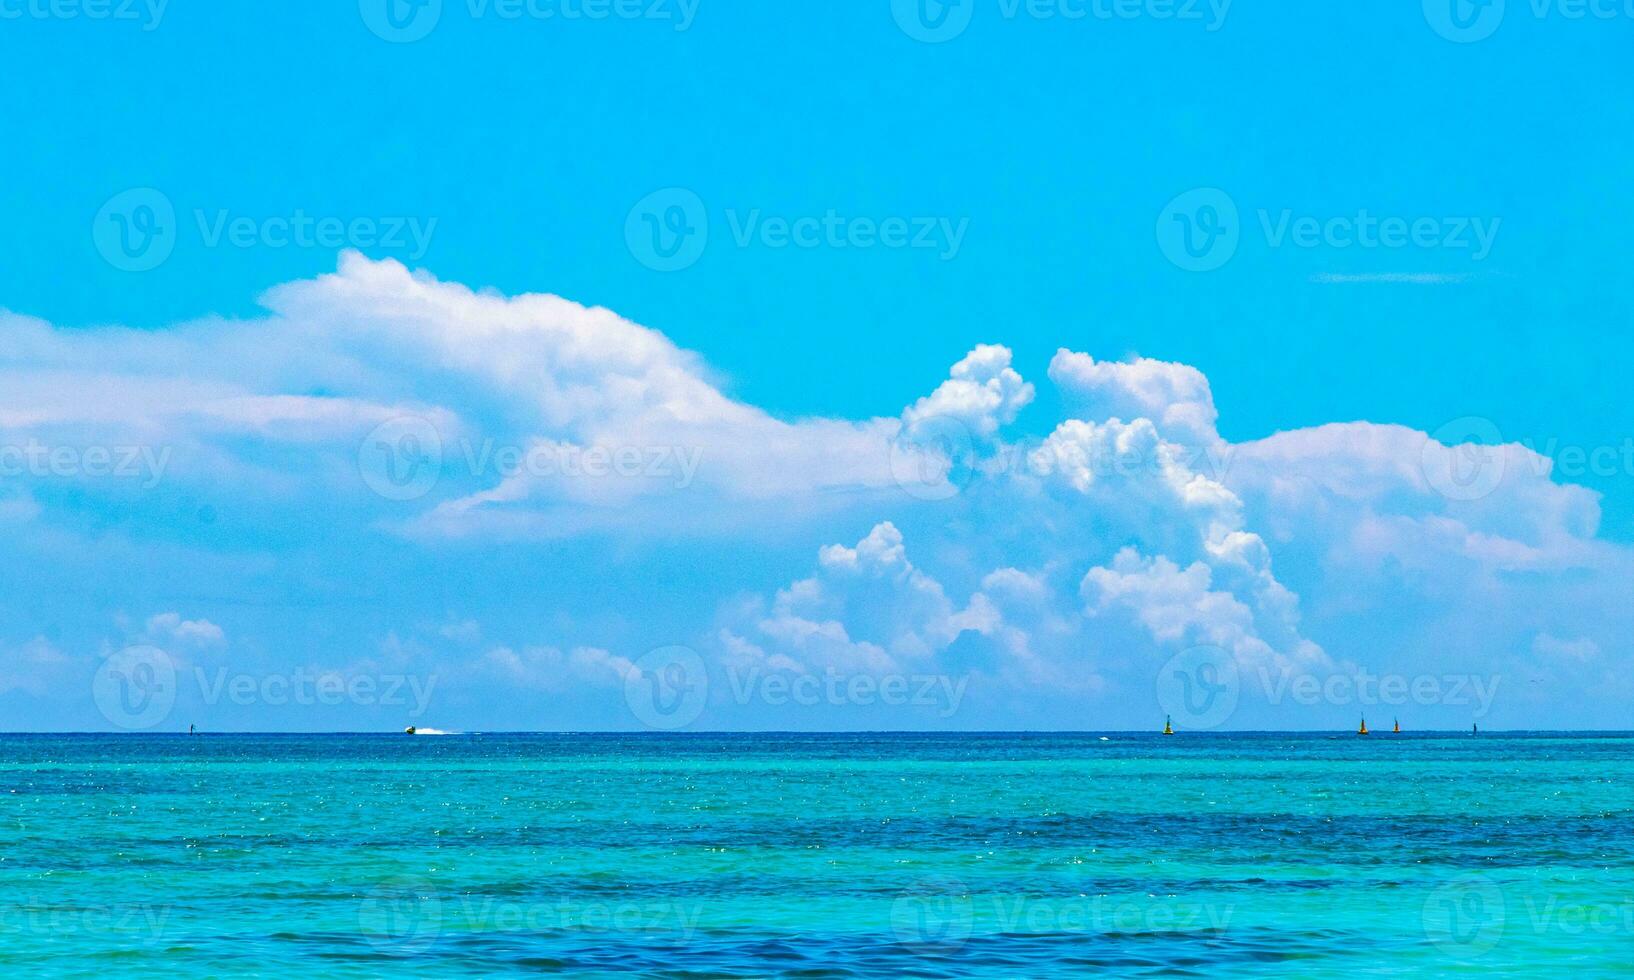 praia tropical do caribe água turquesa clara playa del carmen méxico. foto